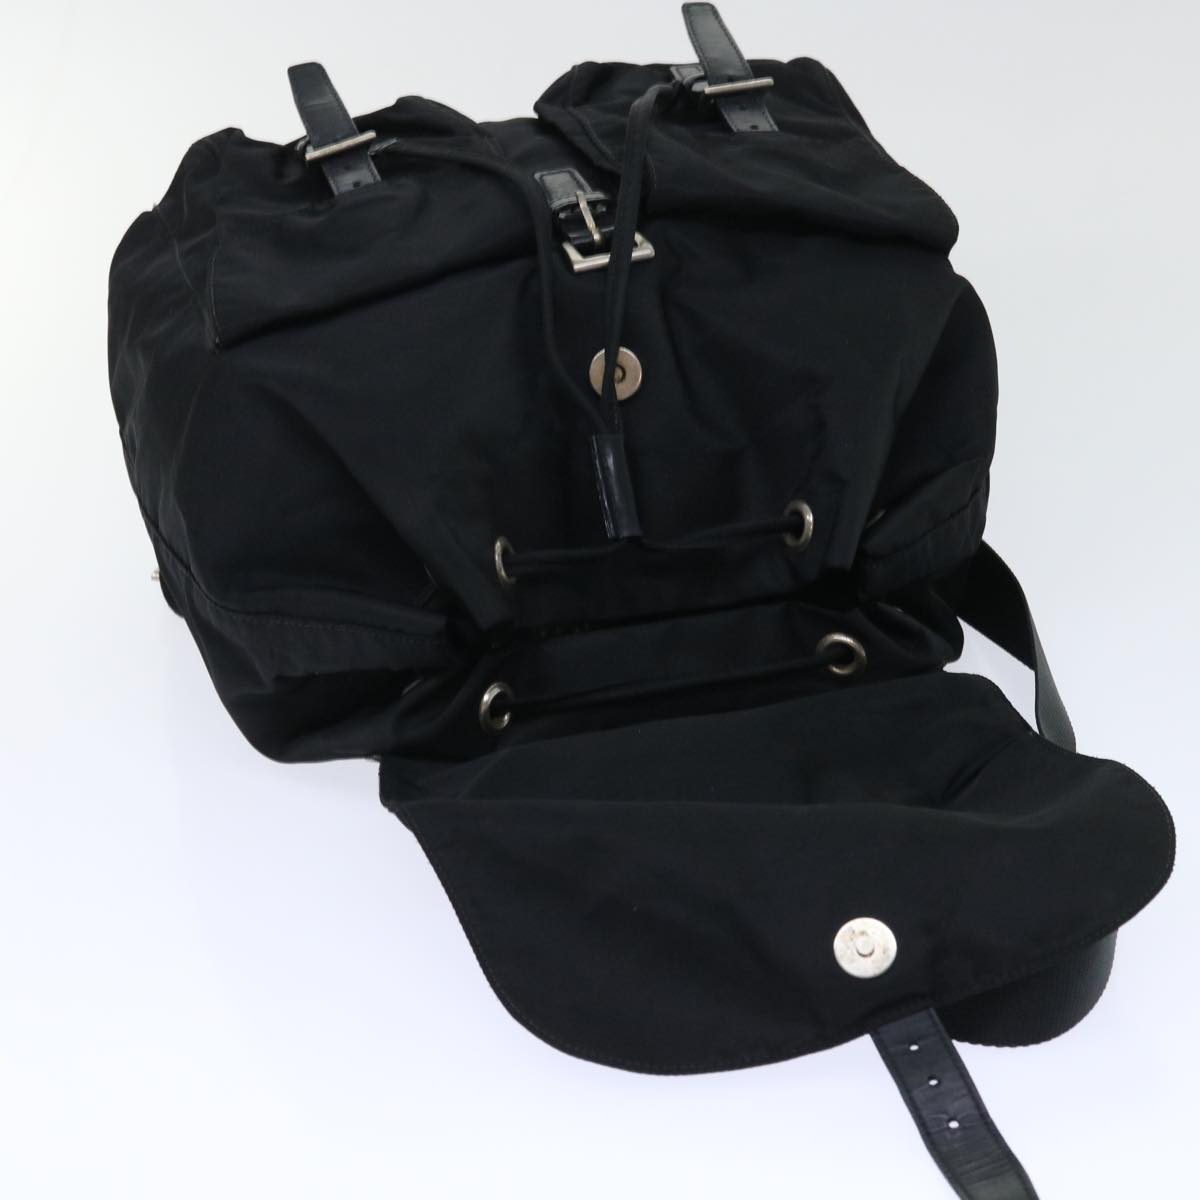 PRADA Backpack Nylon Black Auth 50624